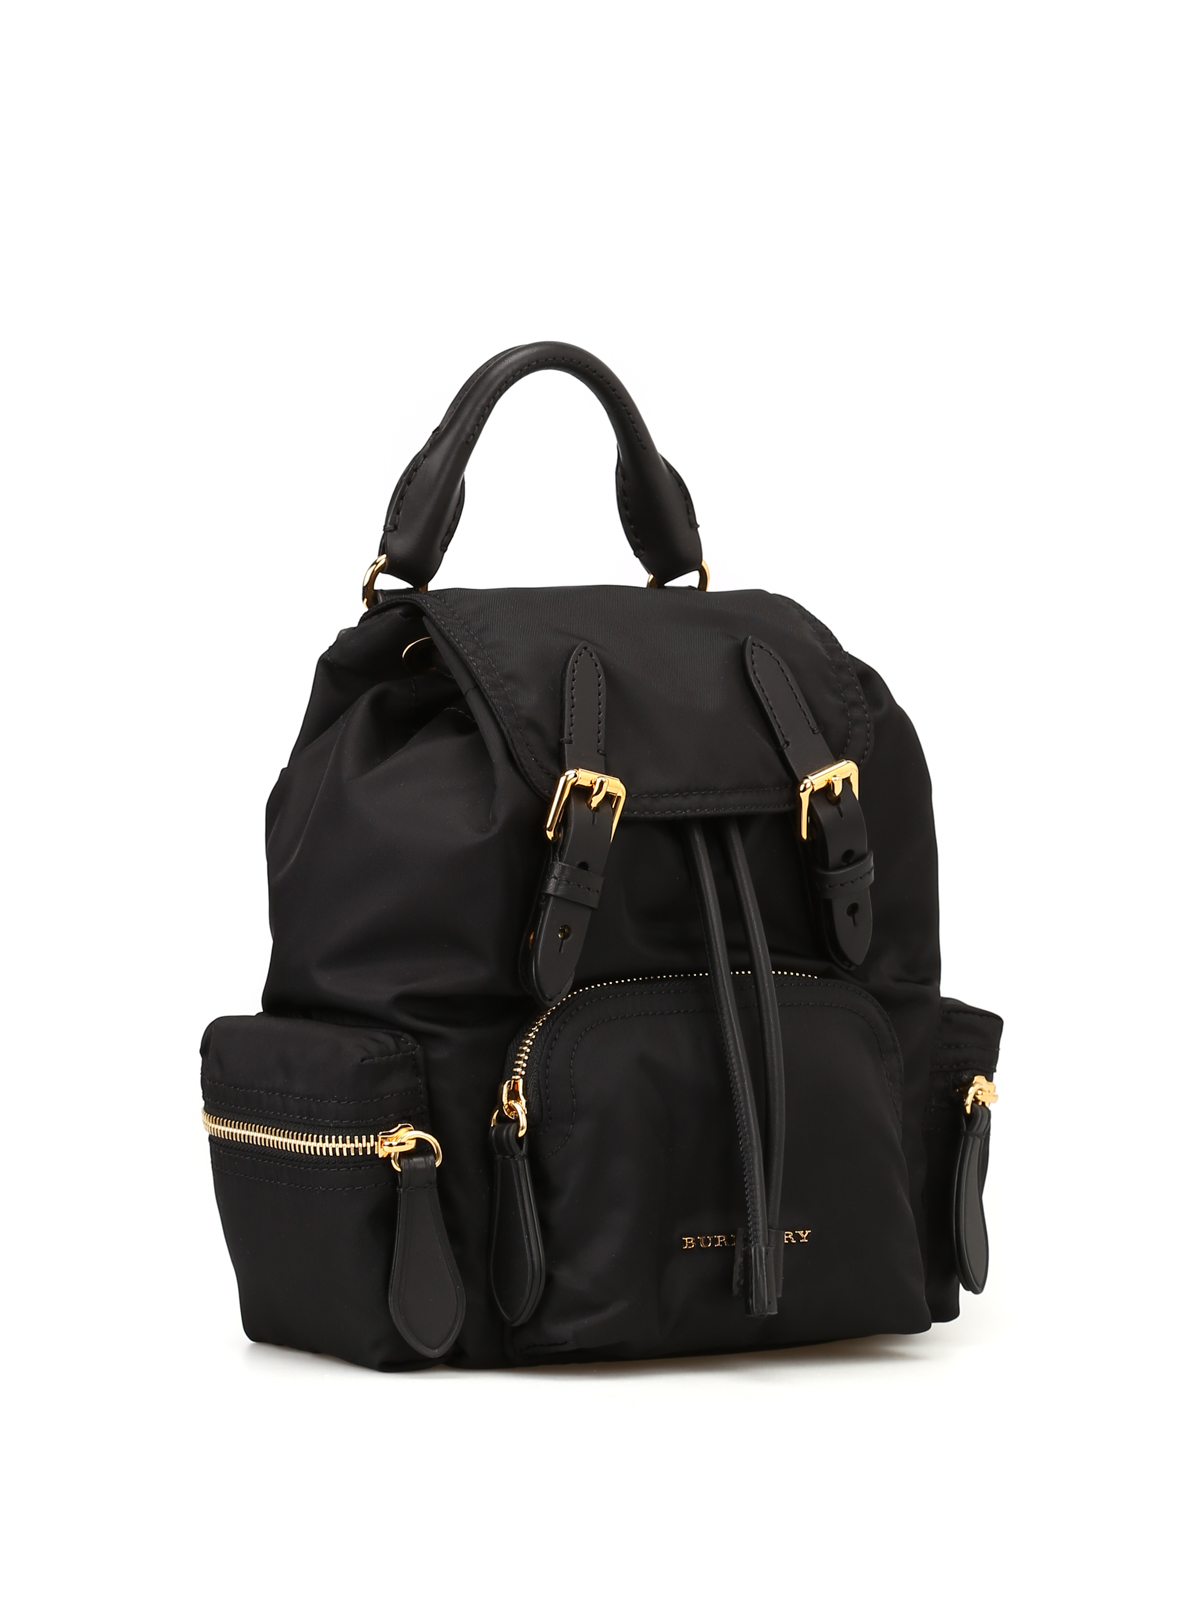 Burberry - The Rucksack black small backpack - backpacks - 4075972